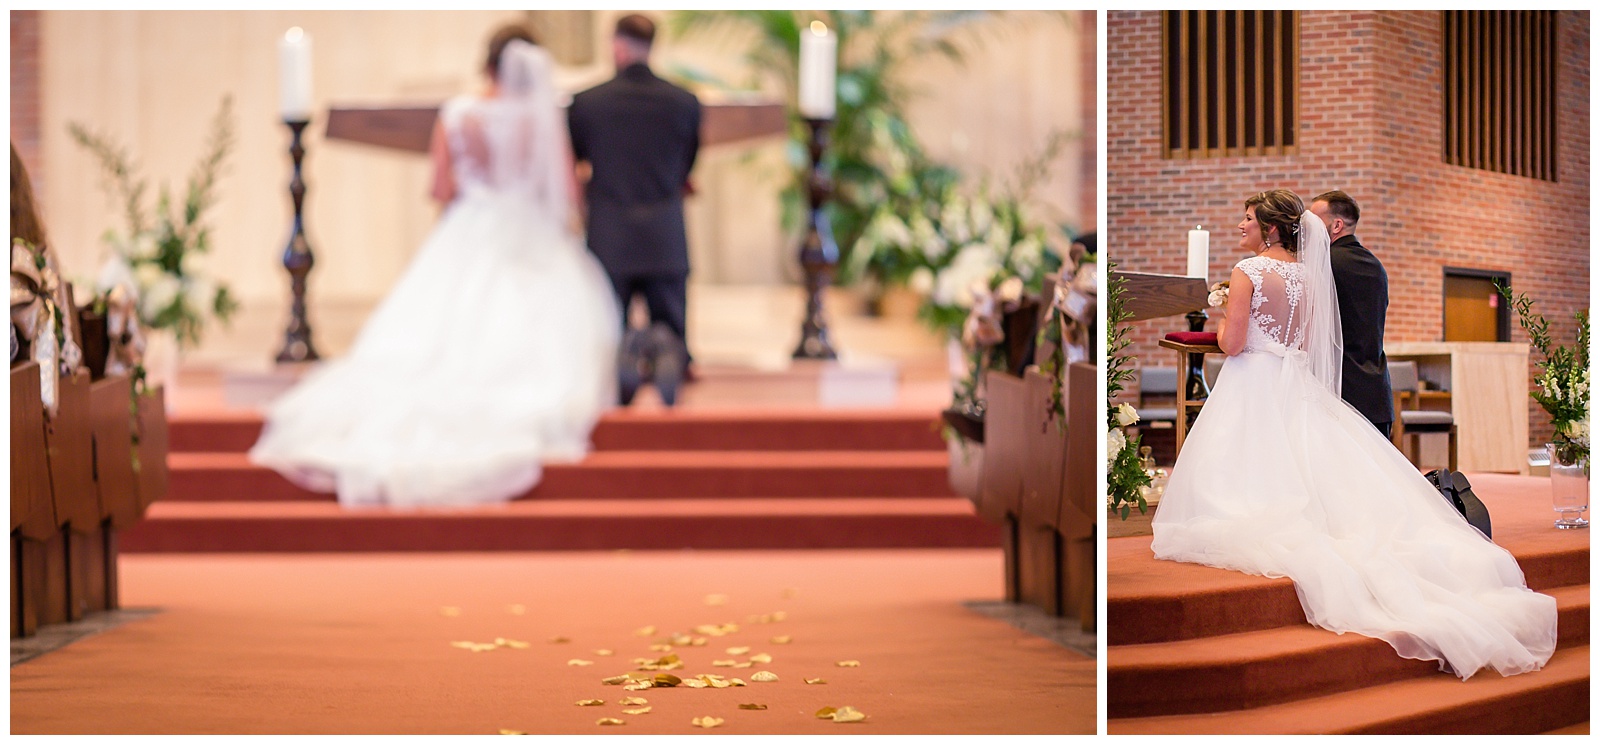 Wedding photography at Christ the King Catholic Church in Topeka, Kansas.